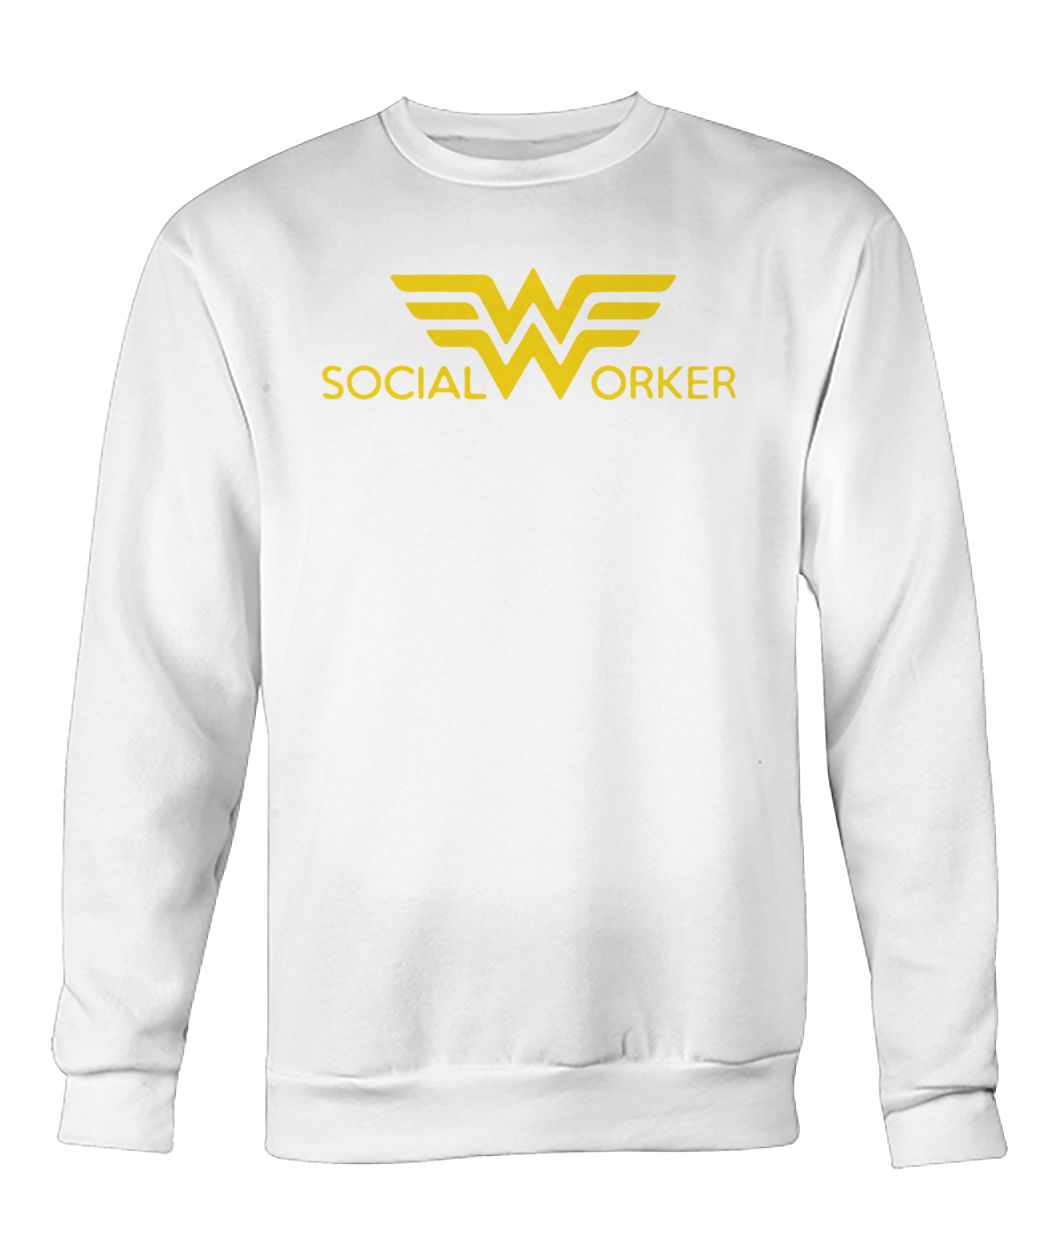 Social worker wonder woman crew neck sweatshirt